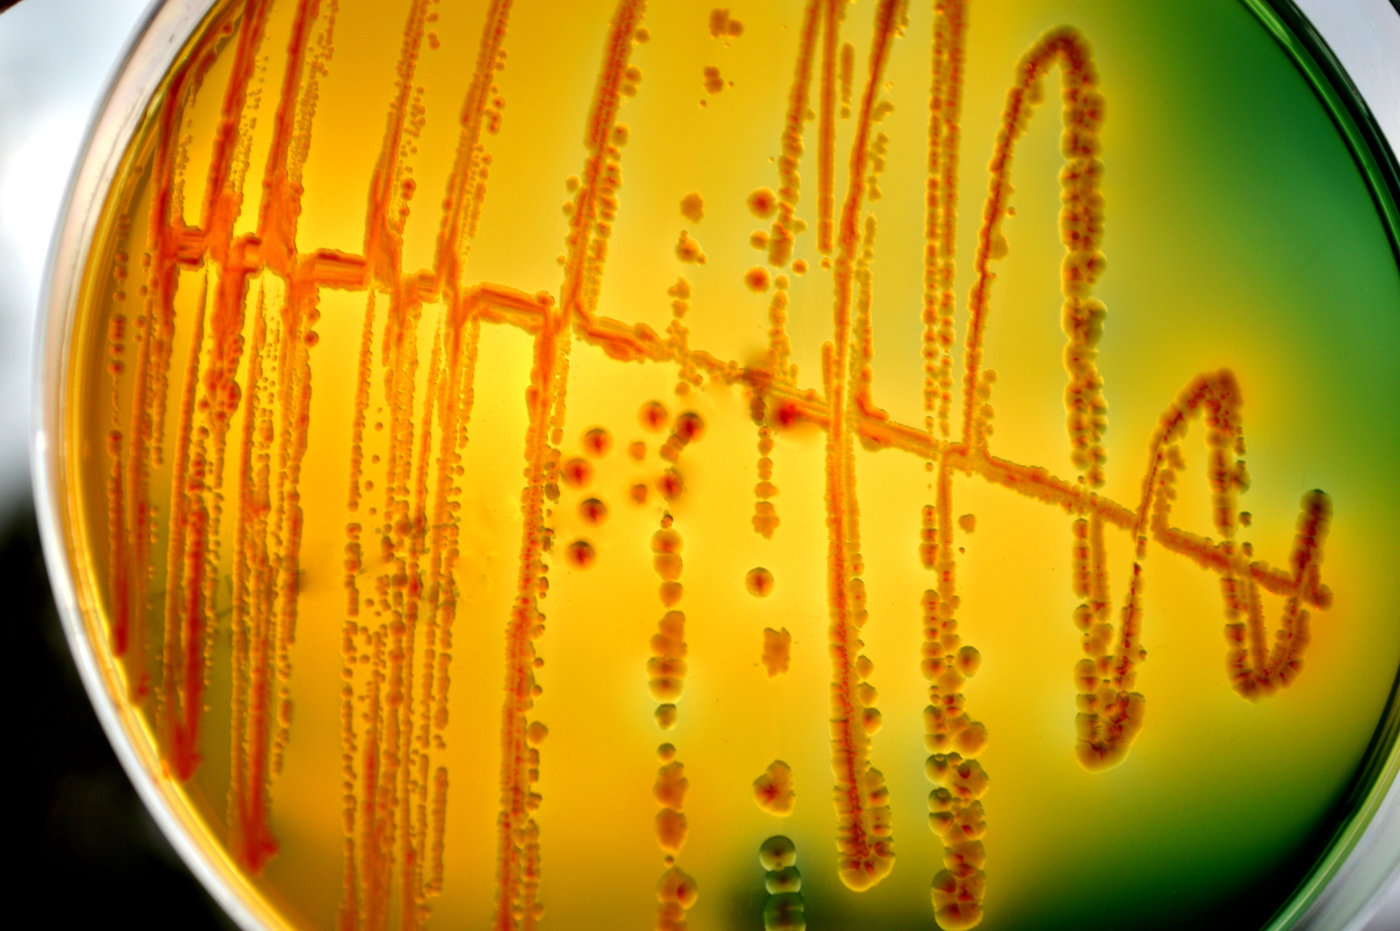 Nanoflores pueden detectar bacterias antes de que se enferme